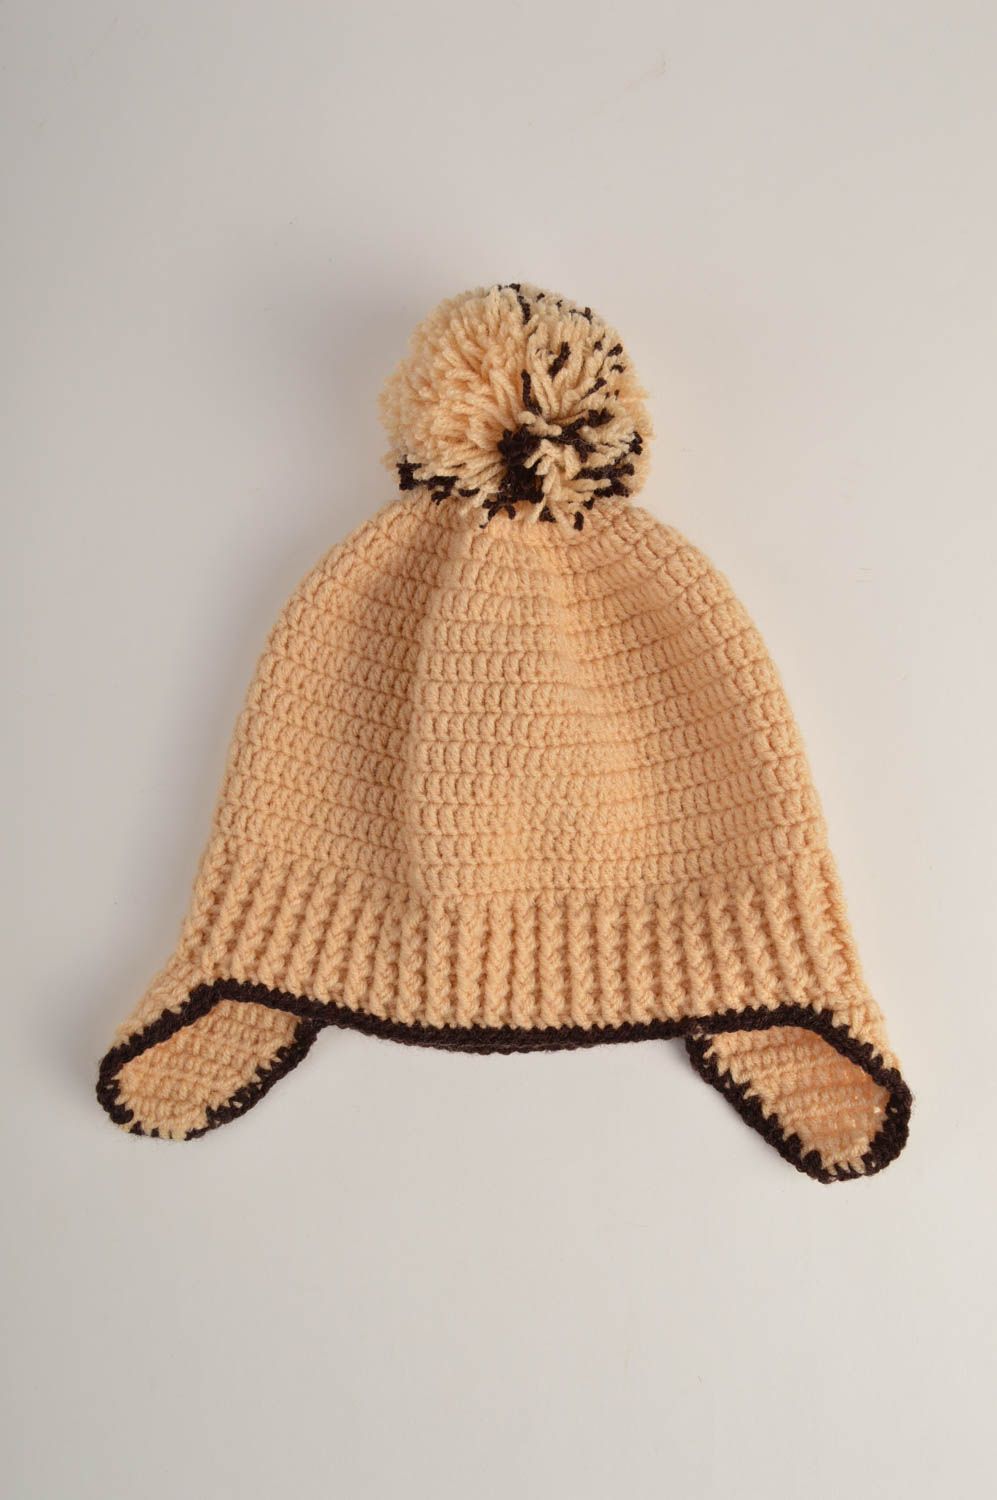 Unusual handmade crochet hat warm hat funny hats for kids fashion kids photo 2